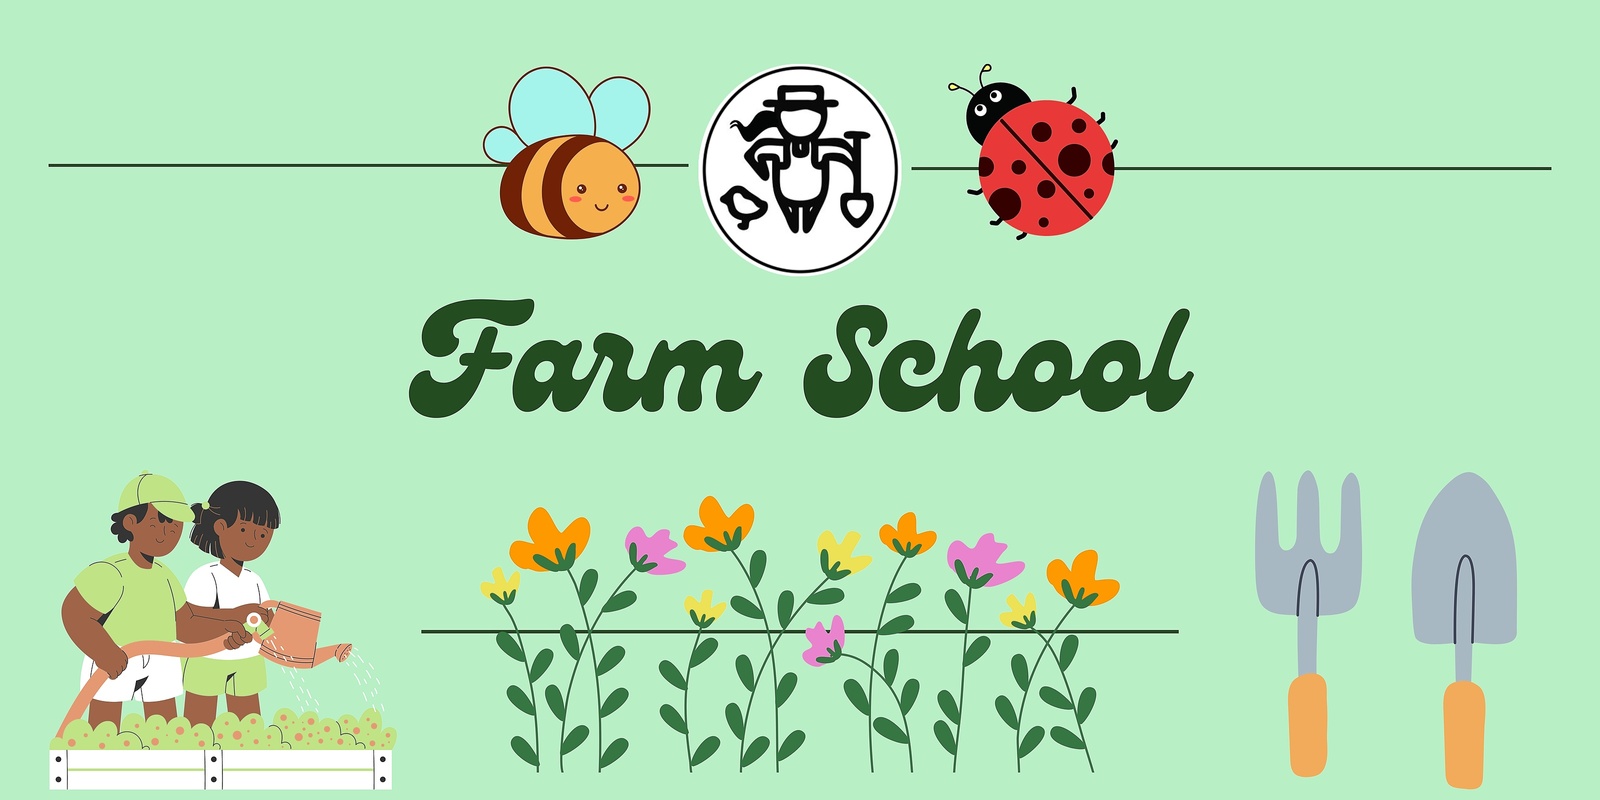 Banner image for Farm School